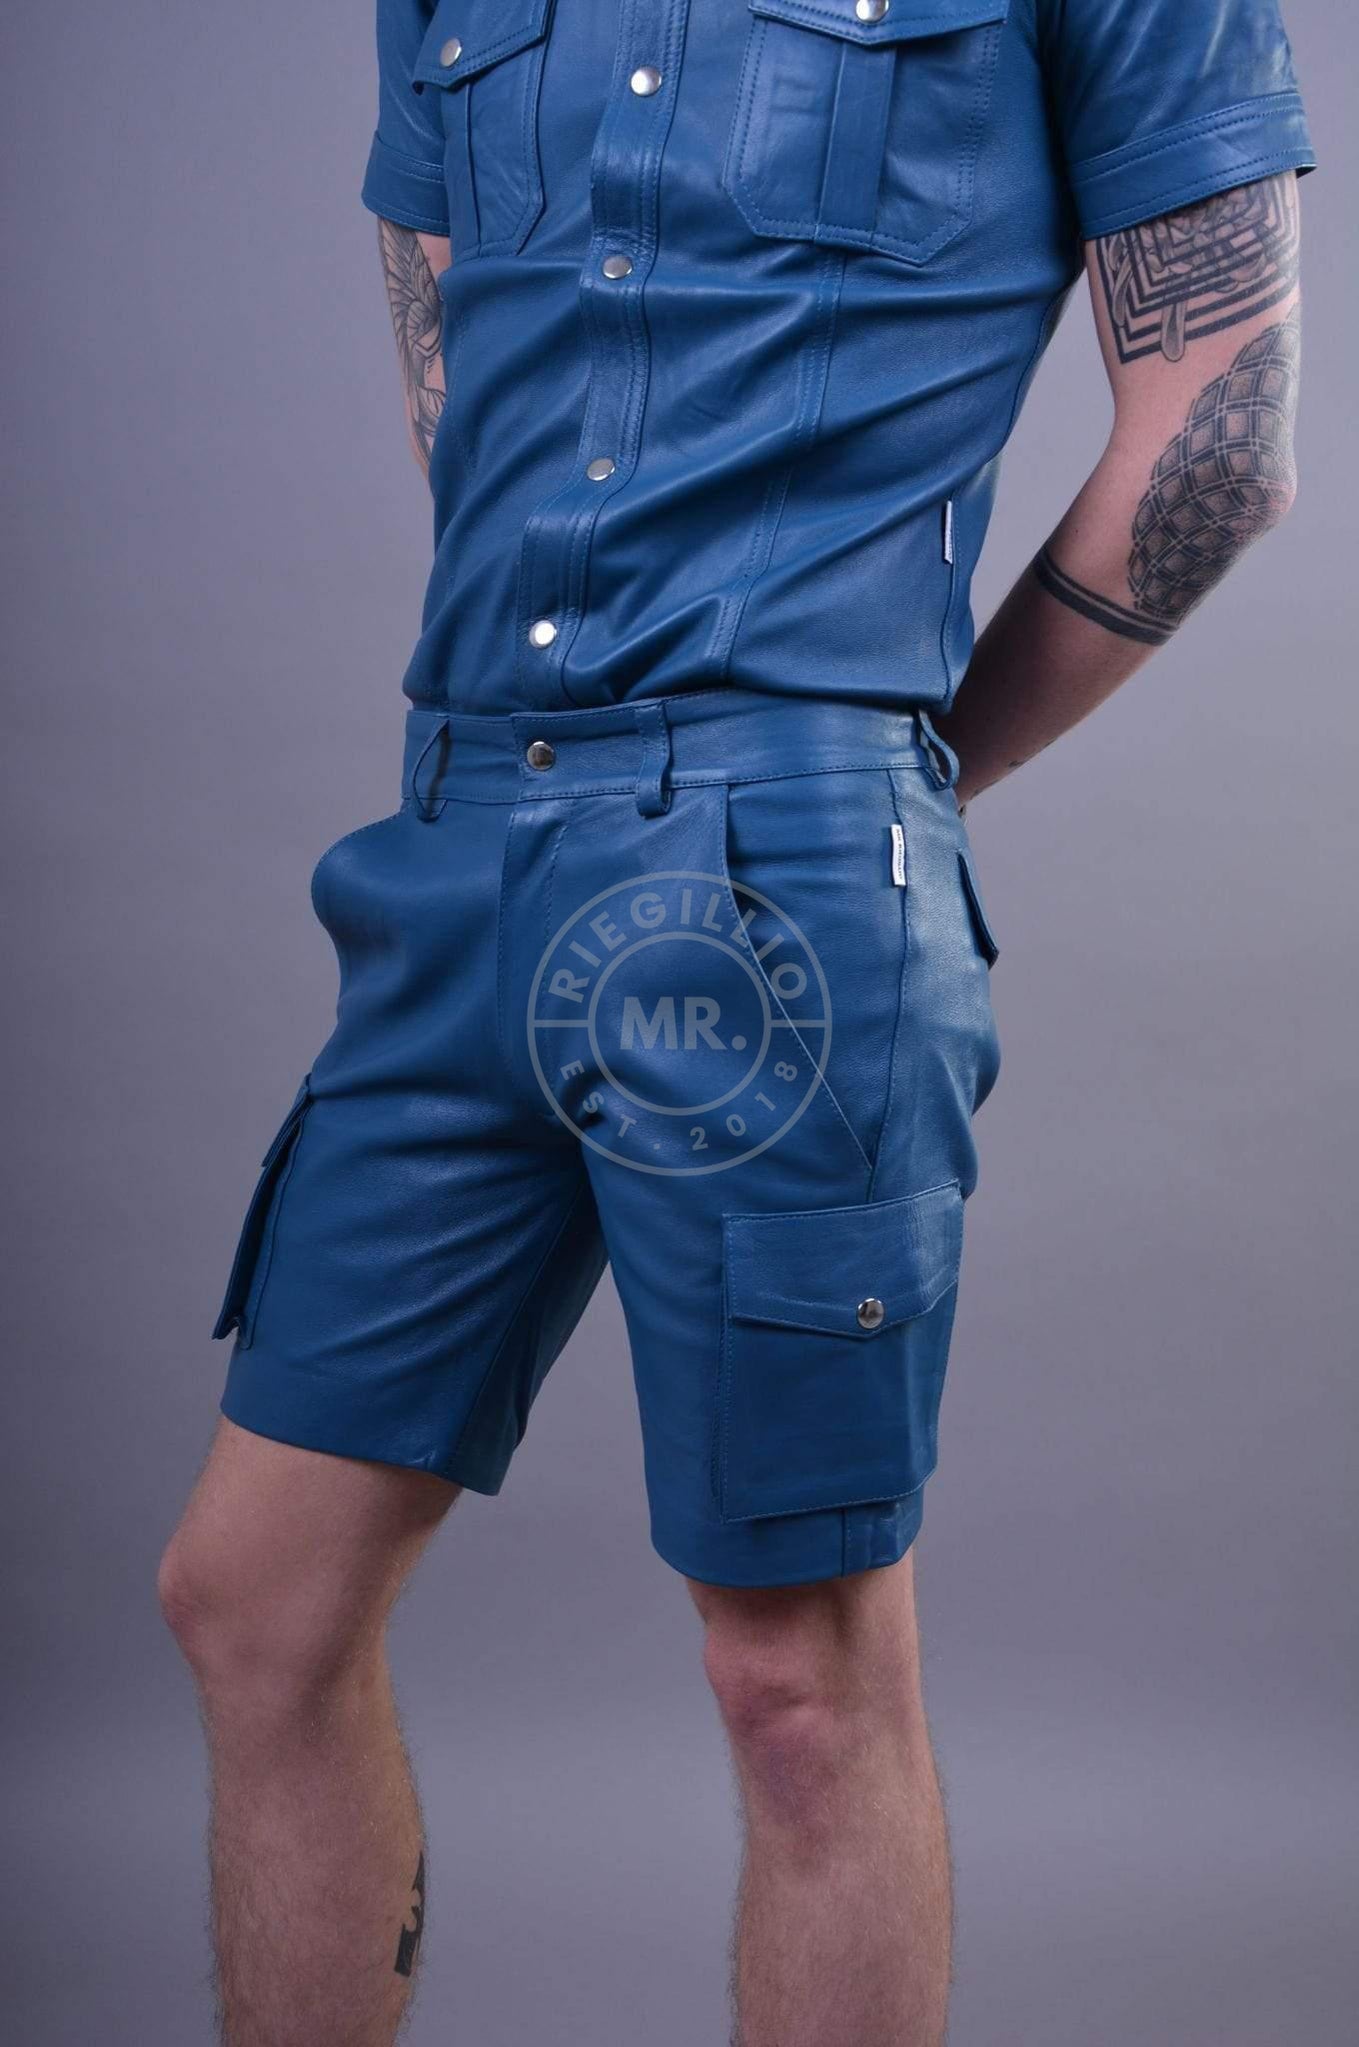 Jeans Blue Leather Cargo Short-at MR. Riegillio